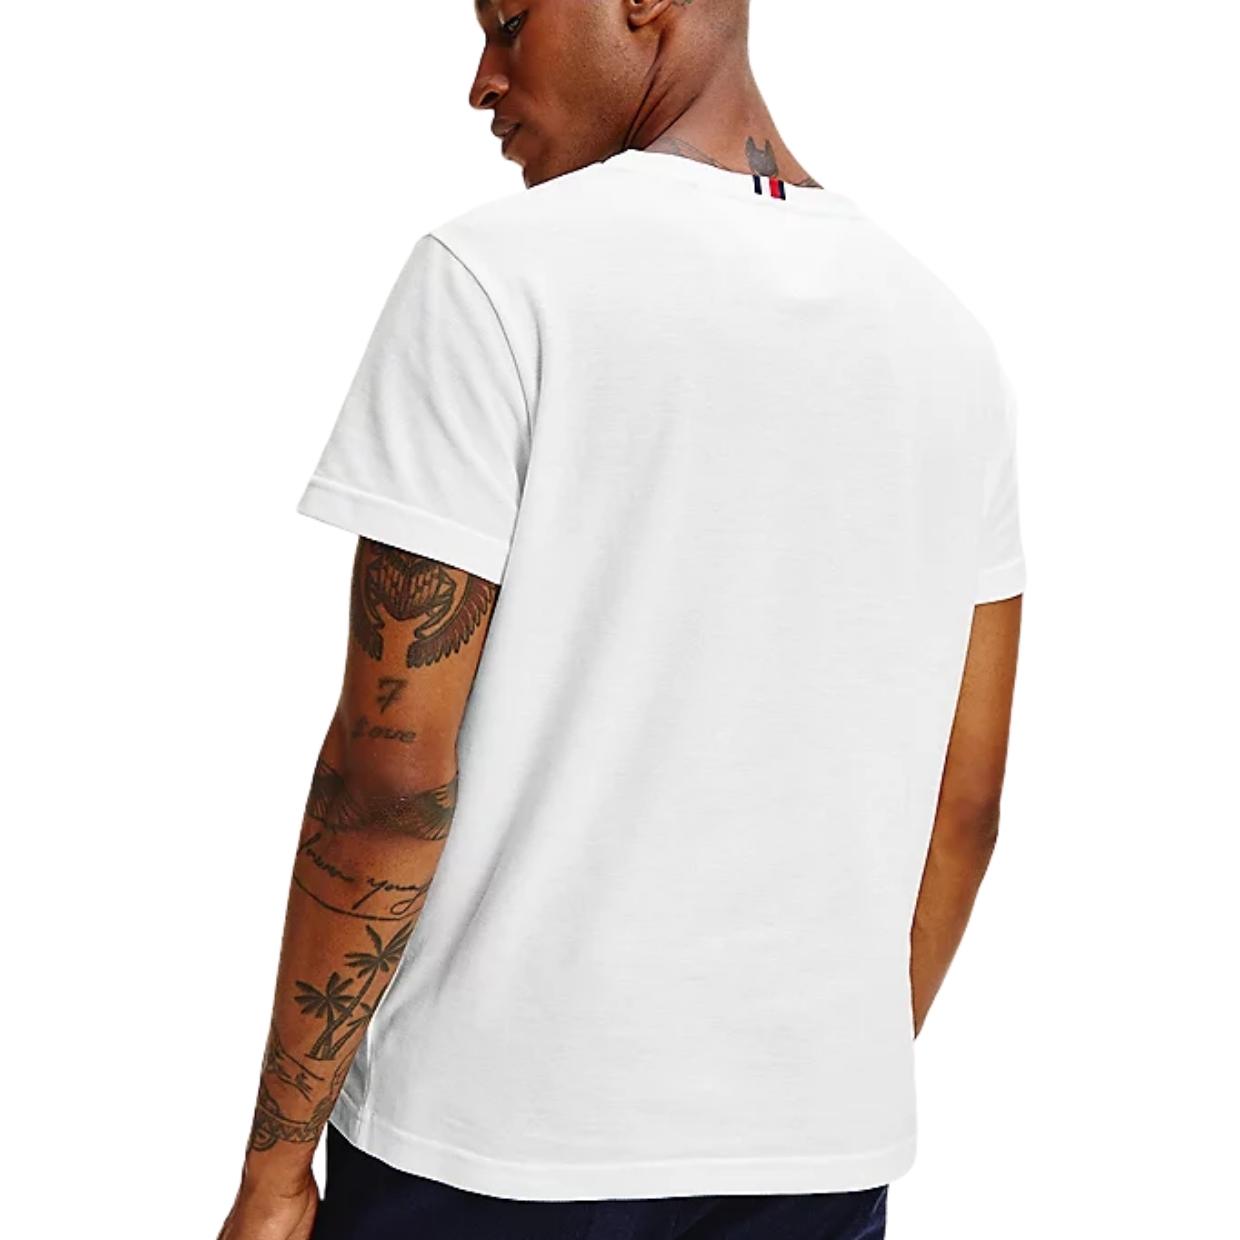 Tommy Hilfiger White Flex Logo T-Shirt